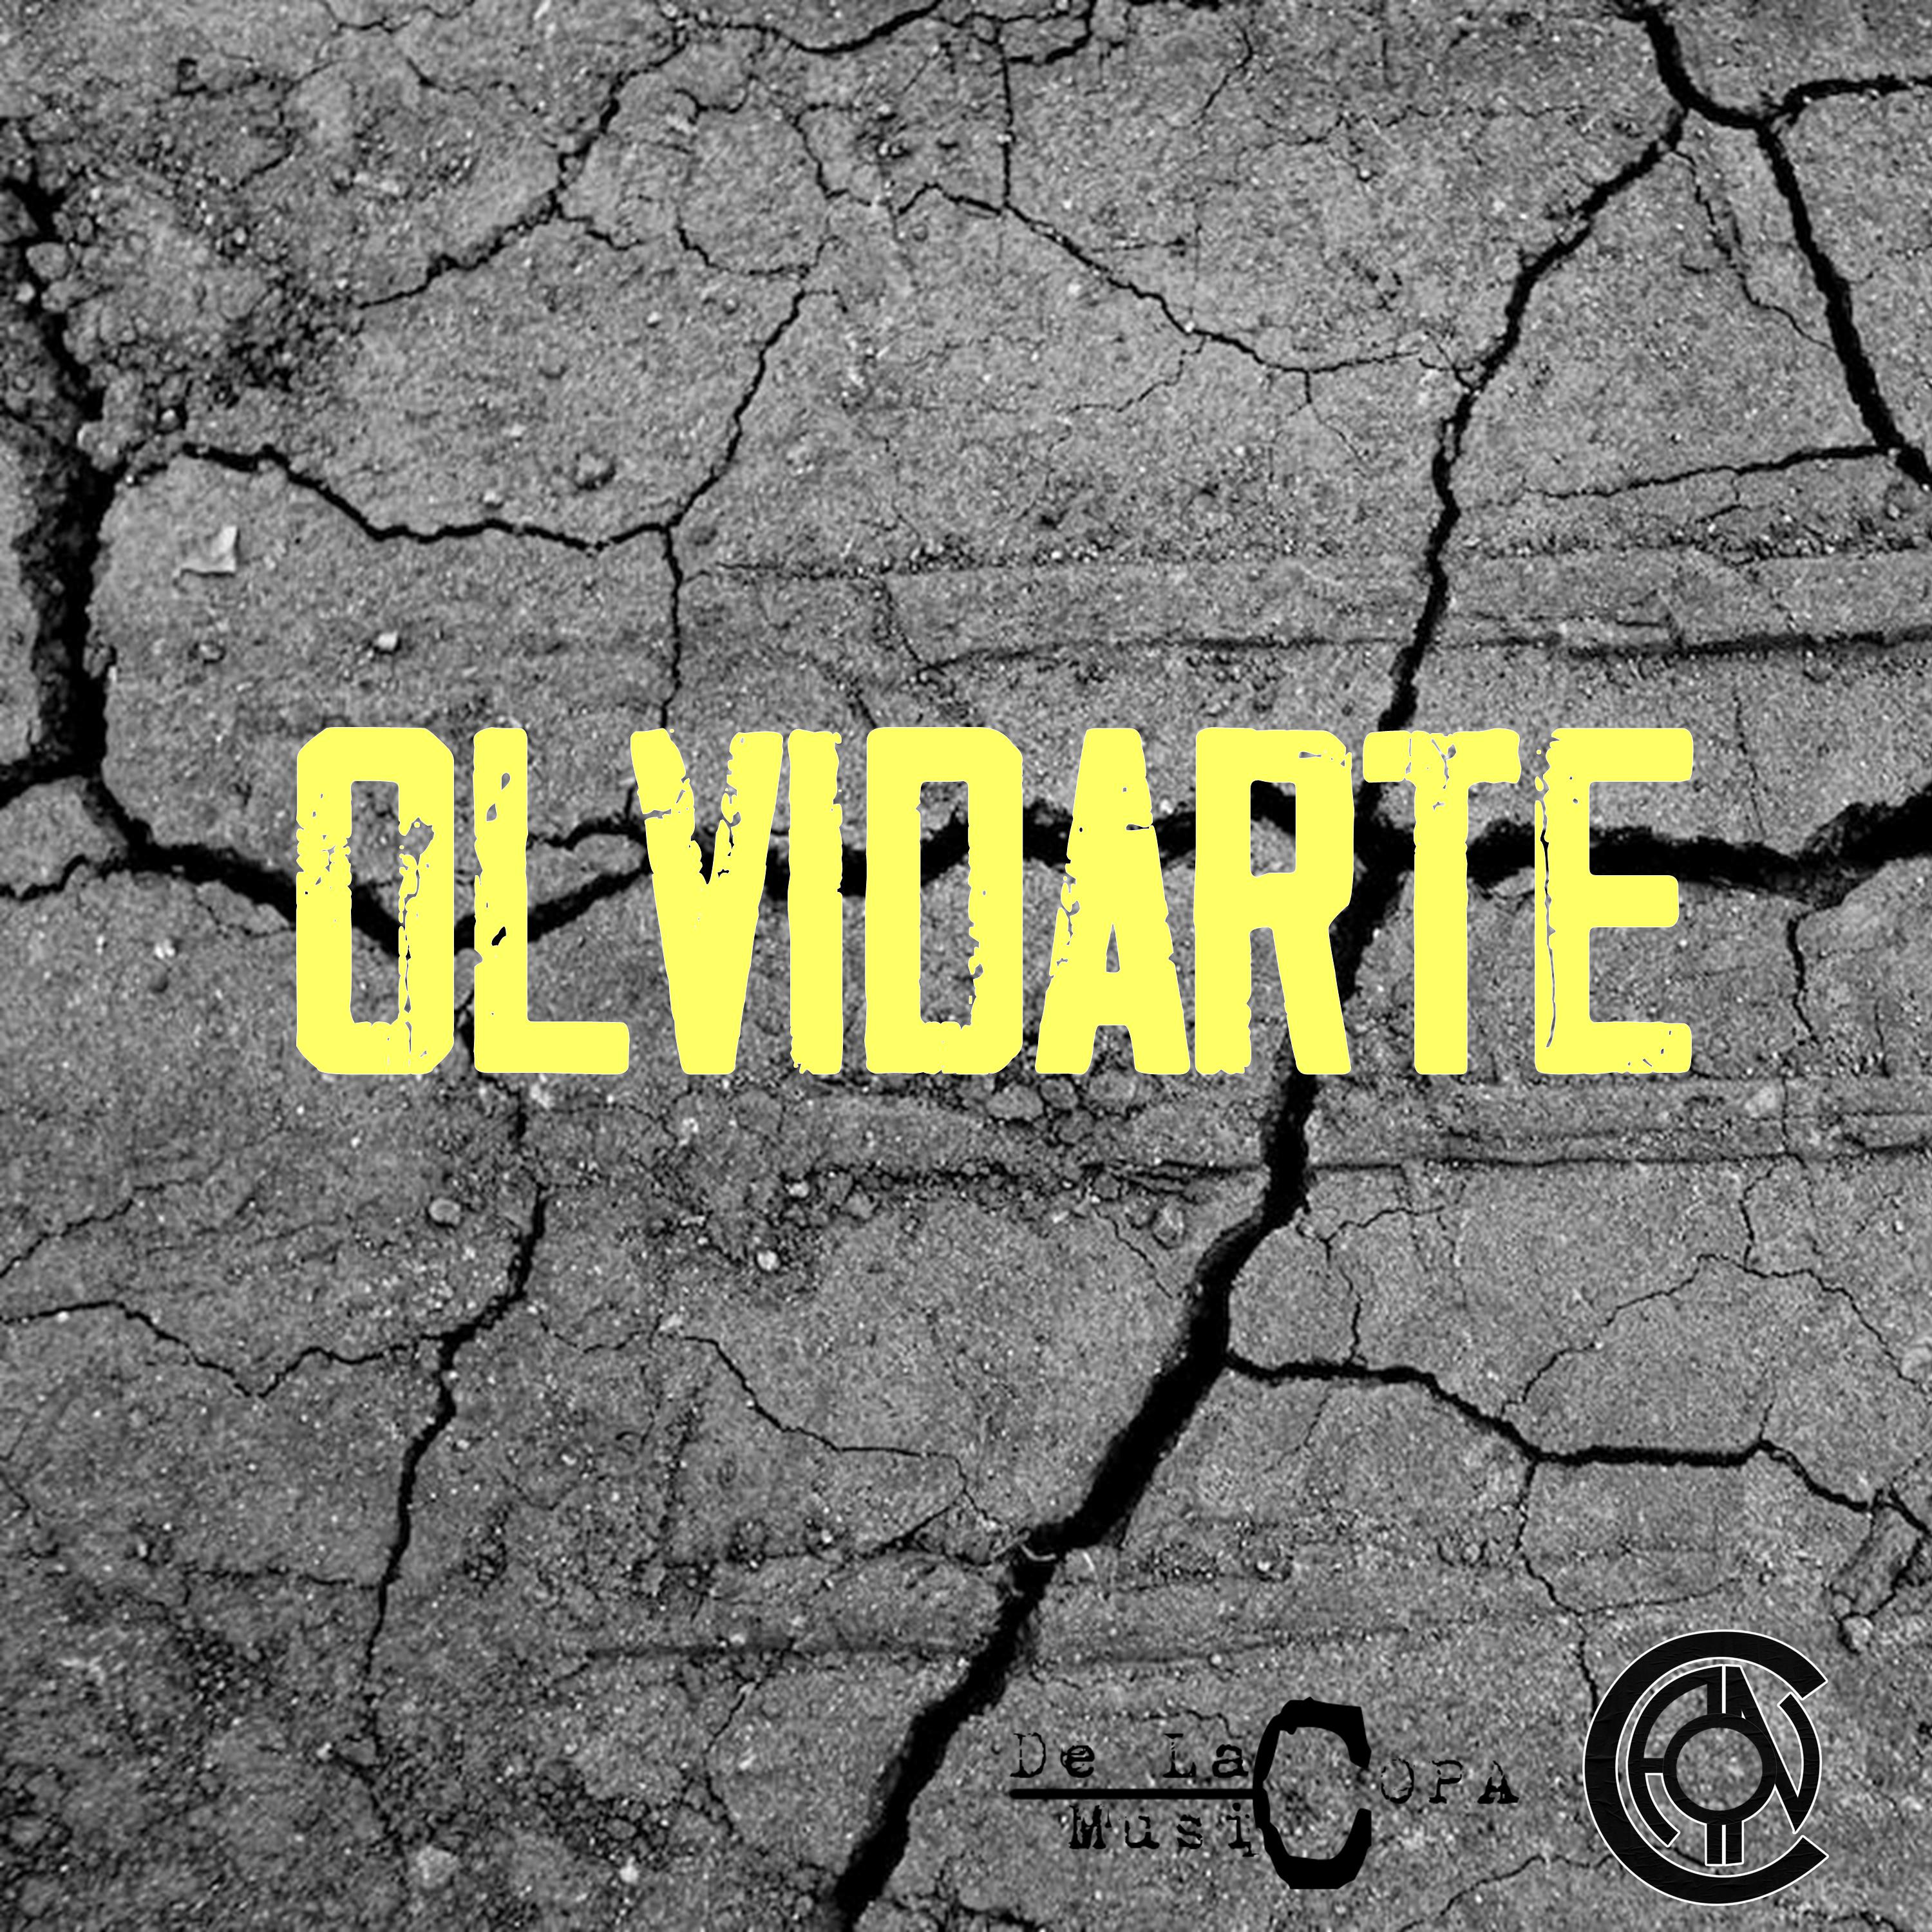 Постер альбома Olvidarte